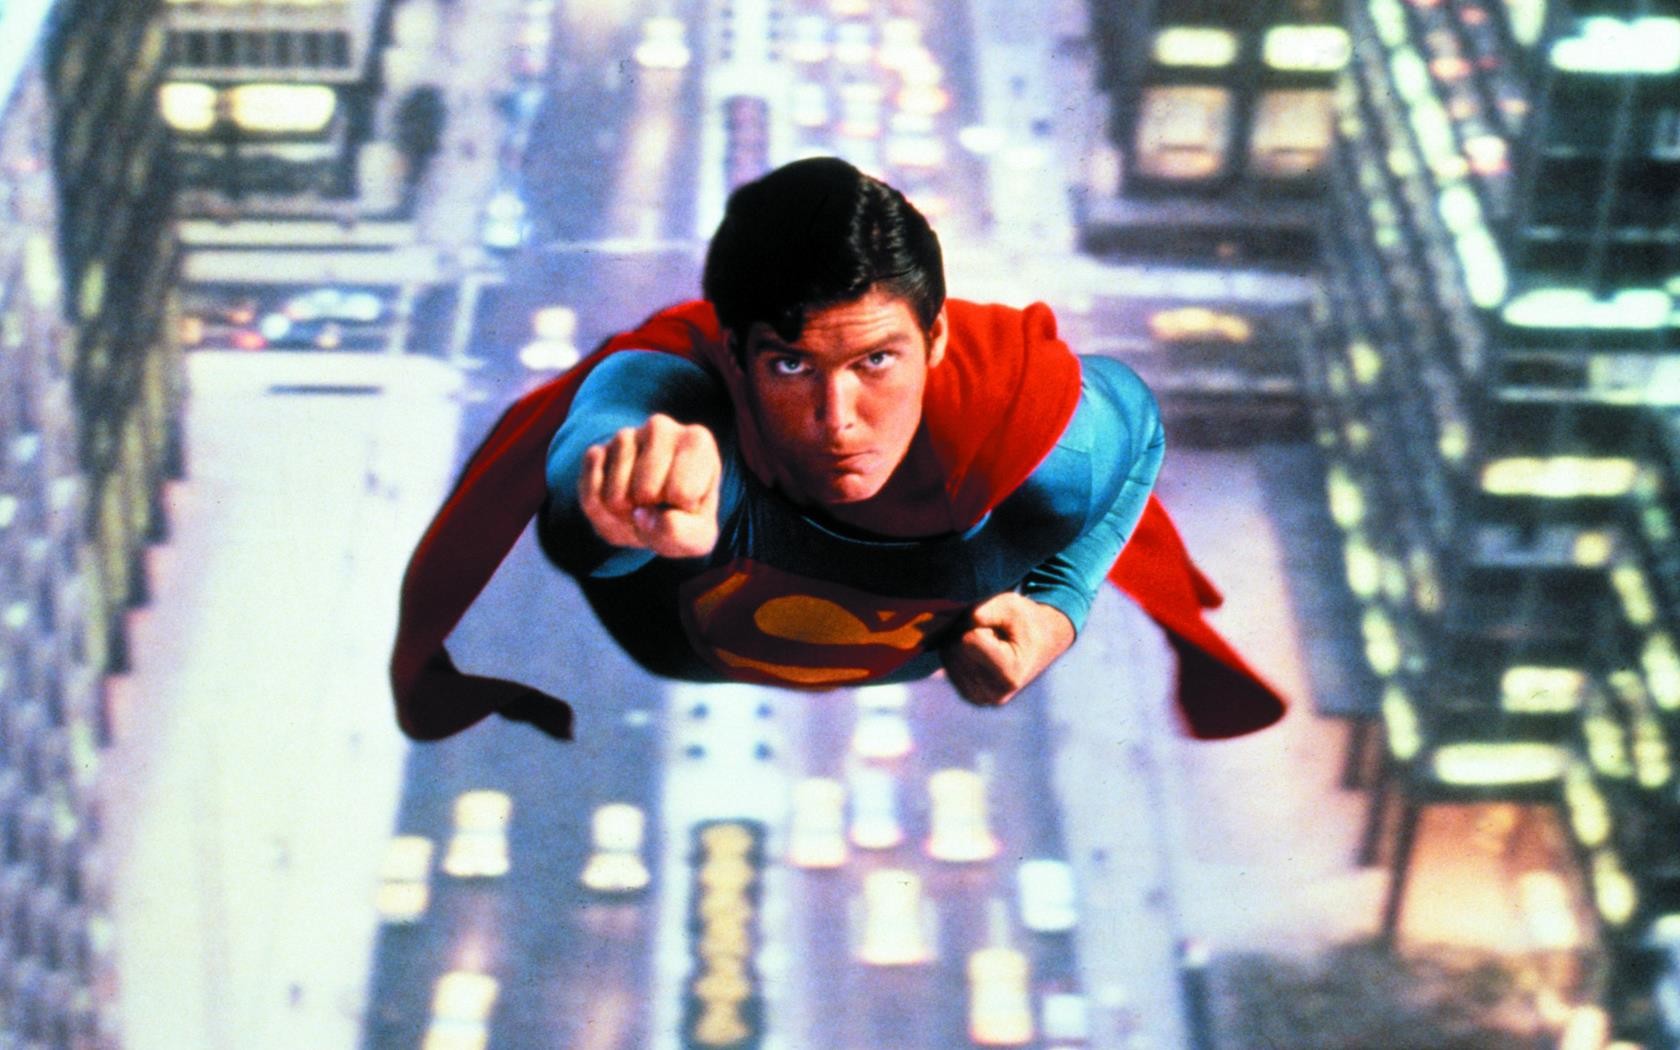 People 1680x1050 Superman movies Superman: The Movie 1978 (Year) Christopher Reeve actor film stills superhero men